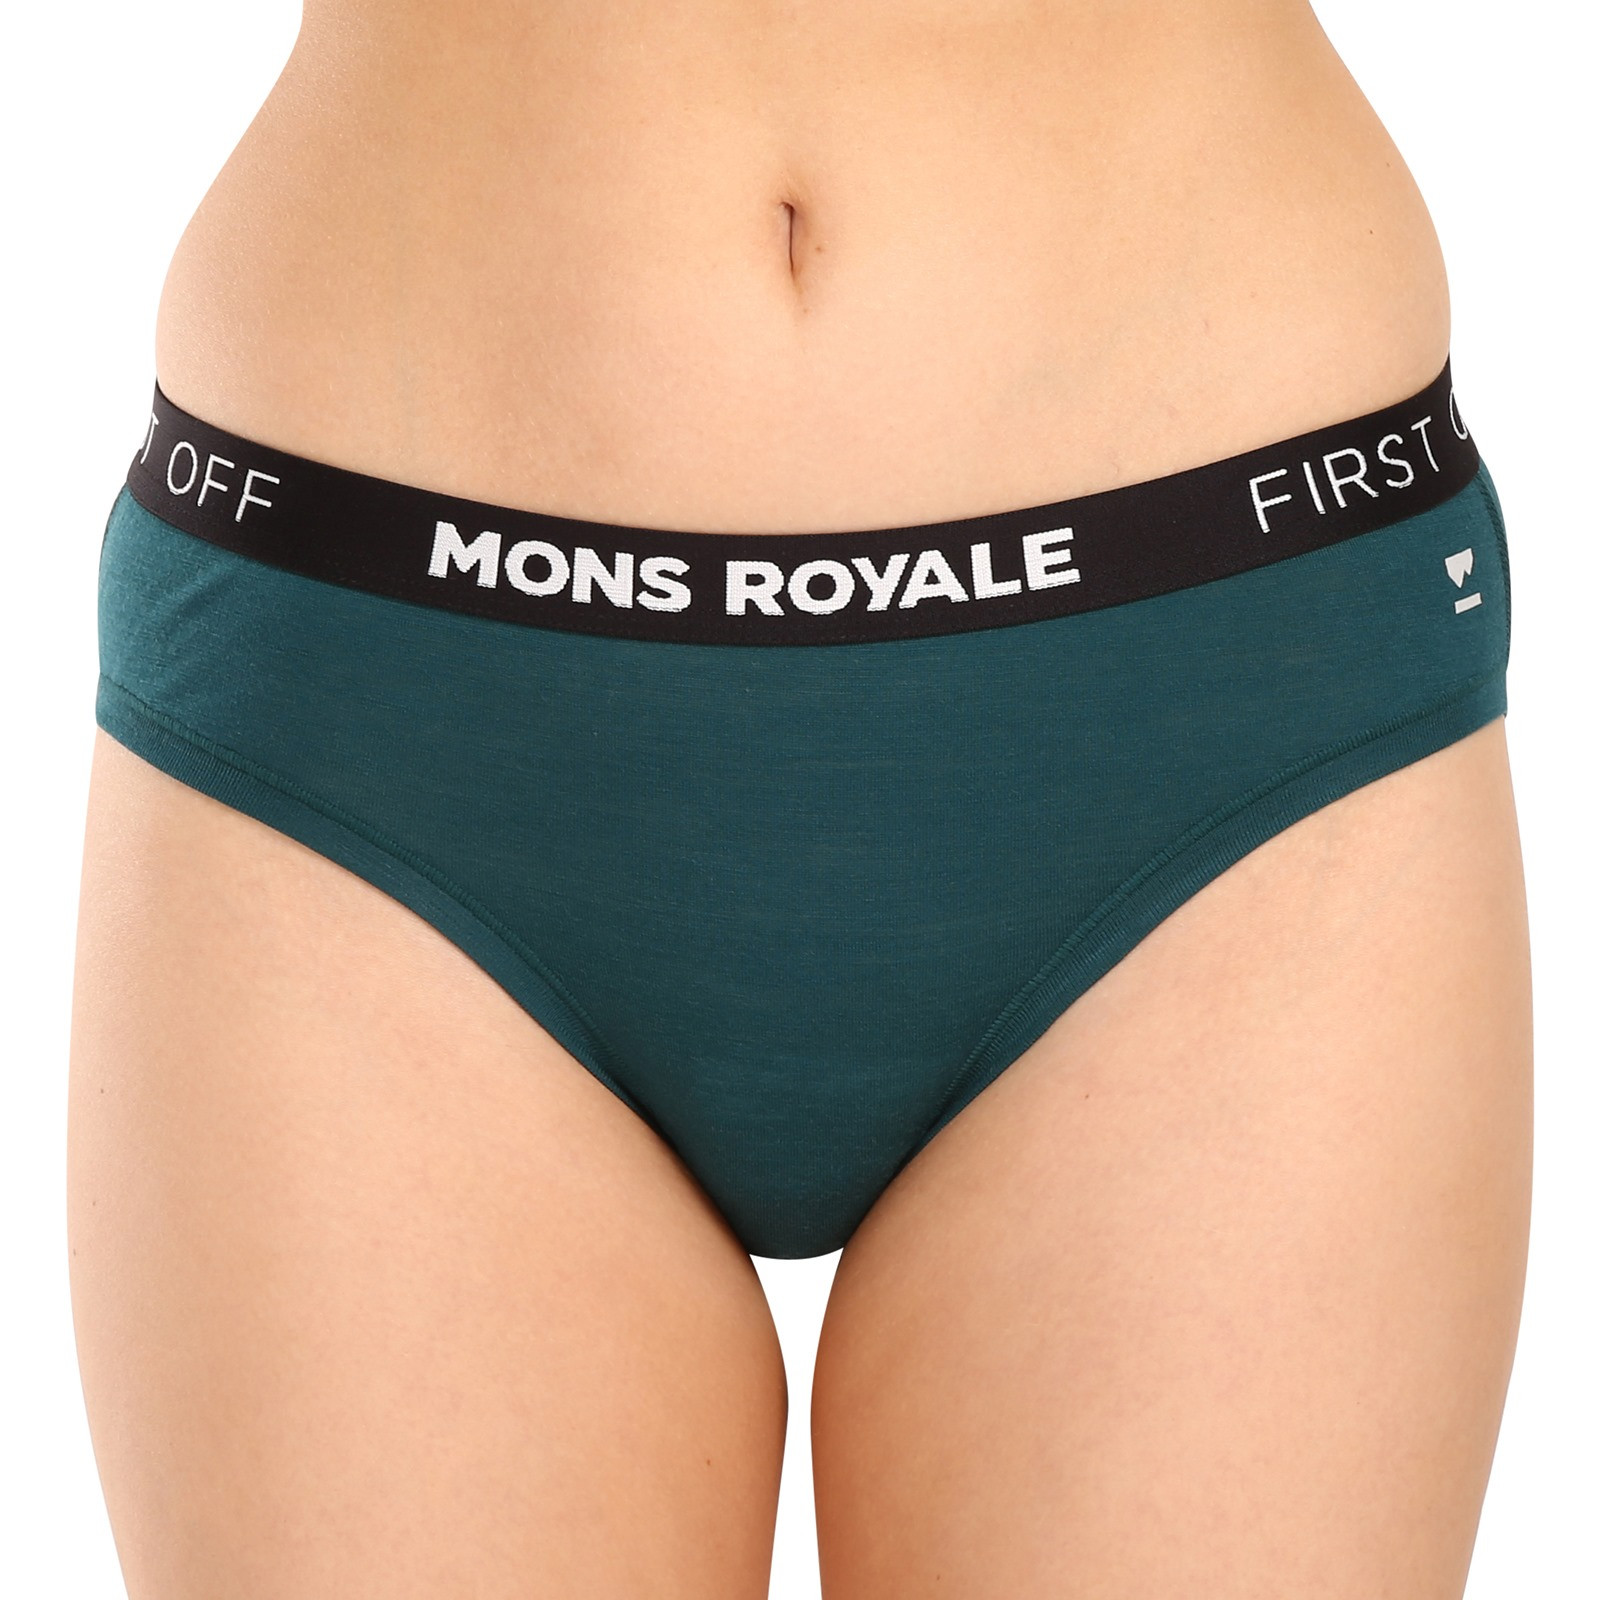 Women's panties Mons Royale merino green